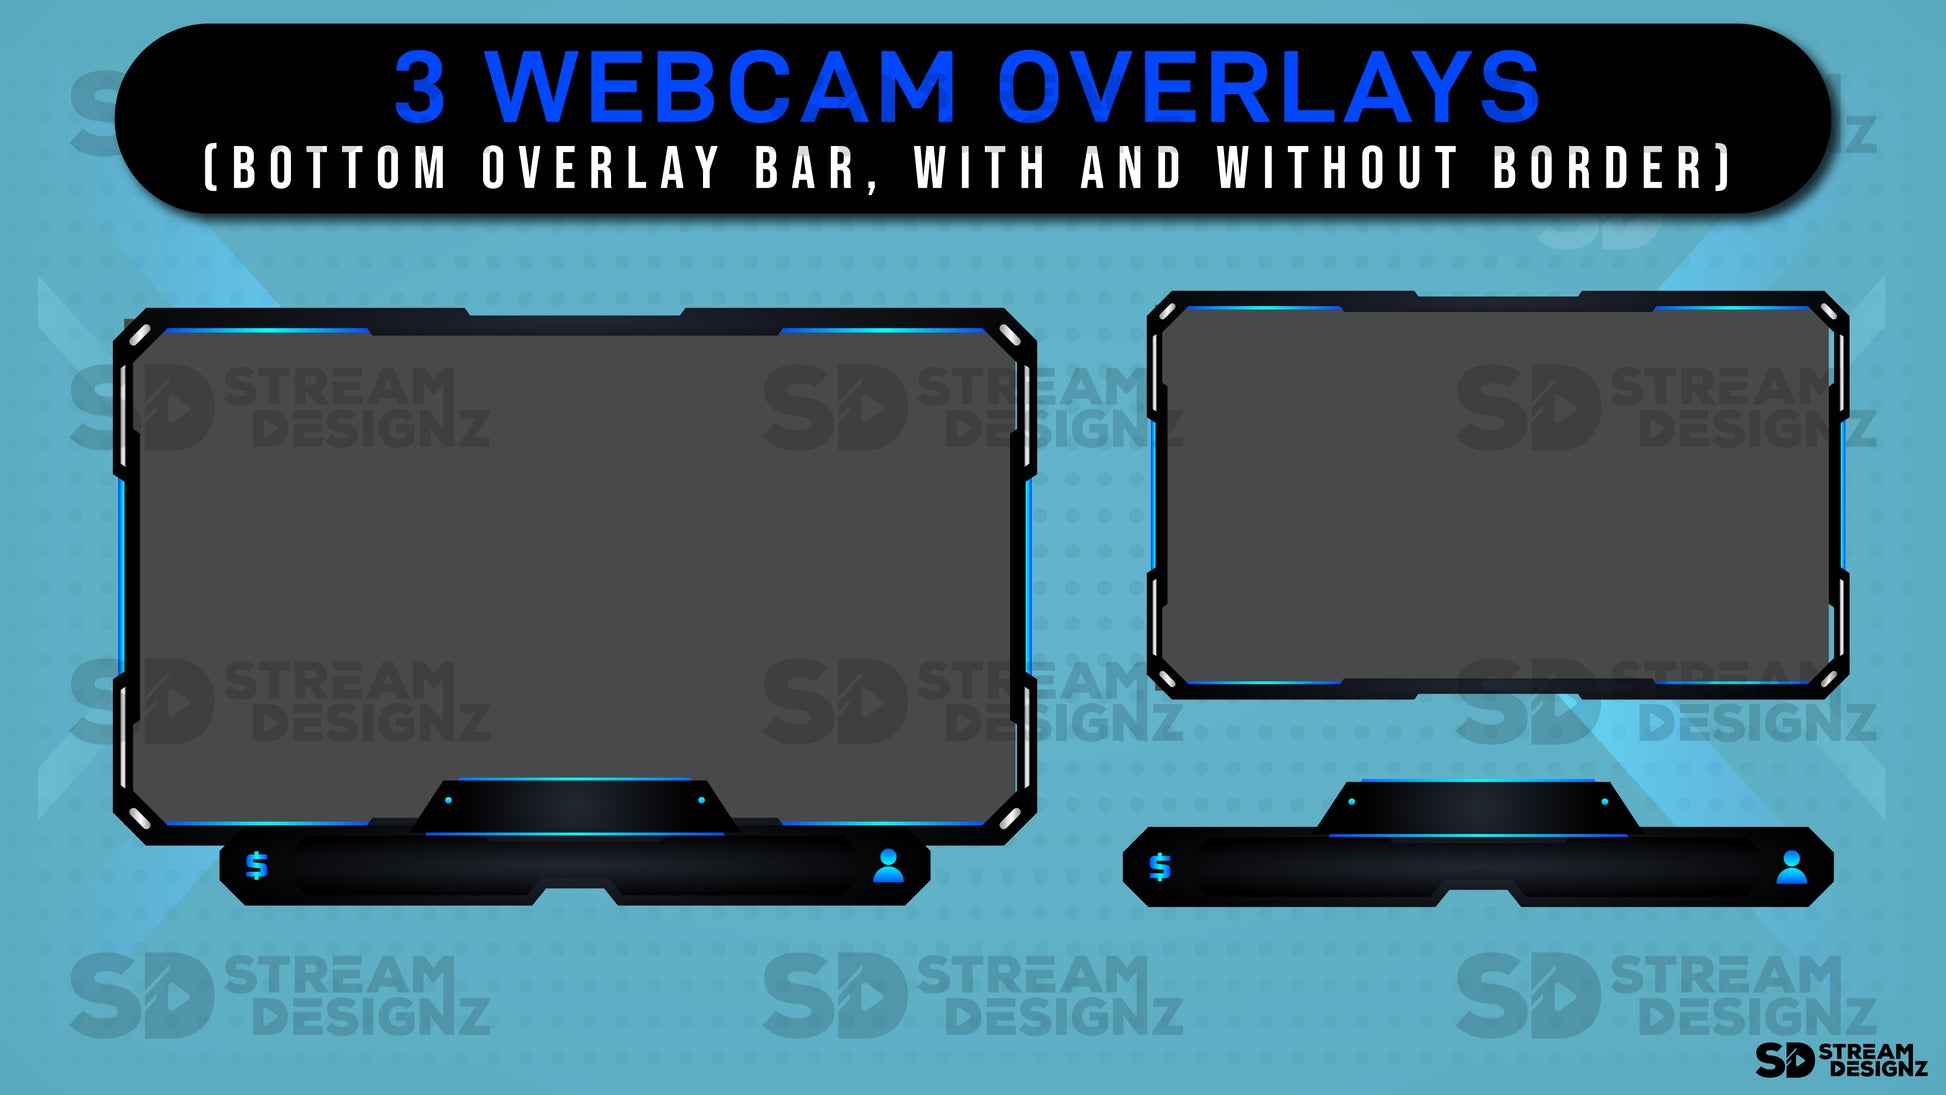 animated stream overlay package - horizon - webcam overlays - stream designz